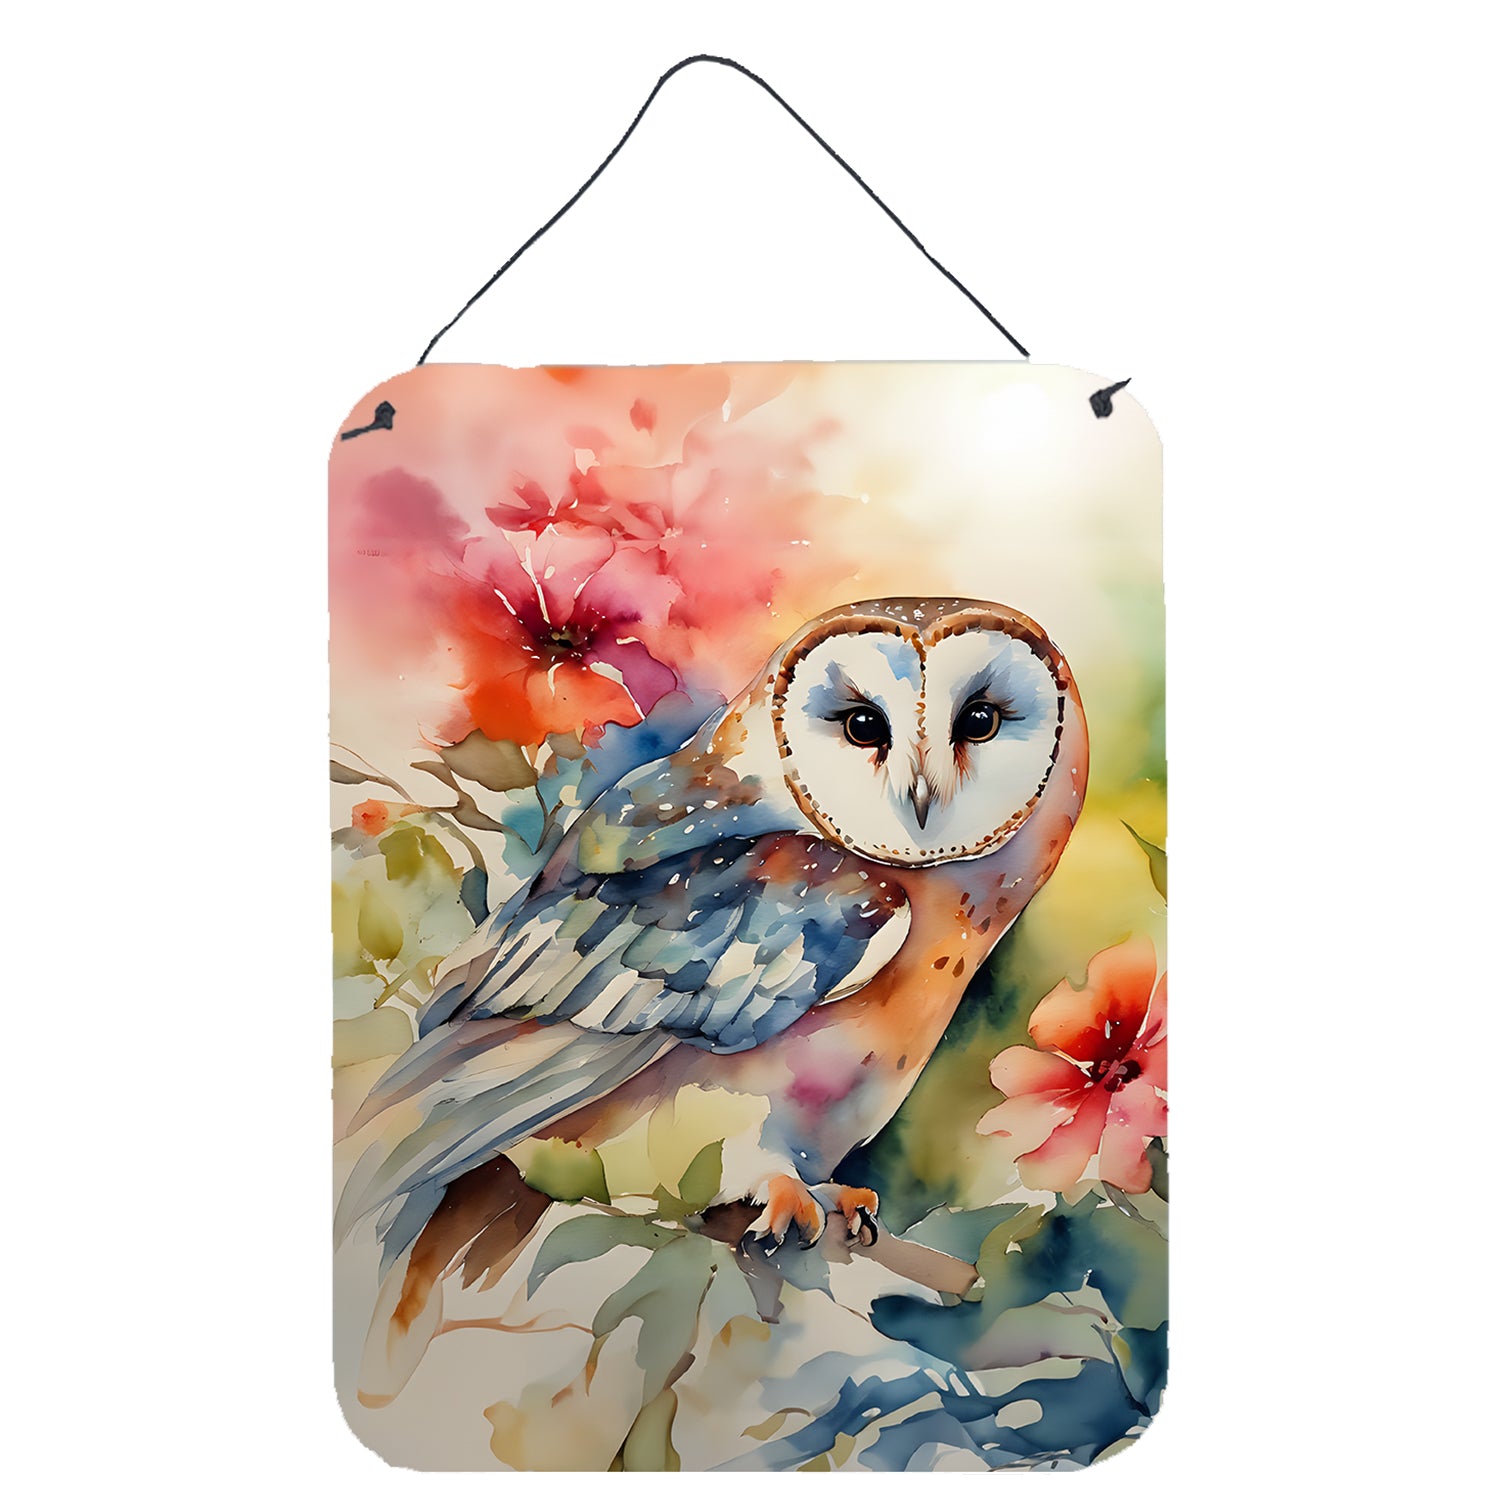 Buy this Barn Owl Wall or Door Hanging Prints